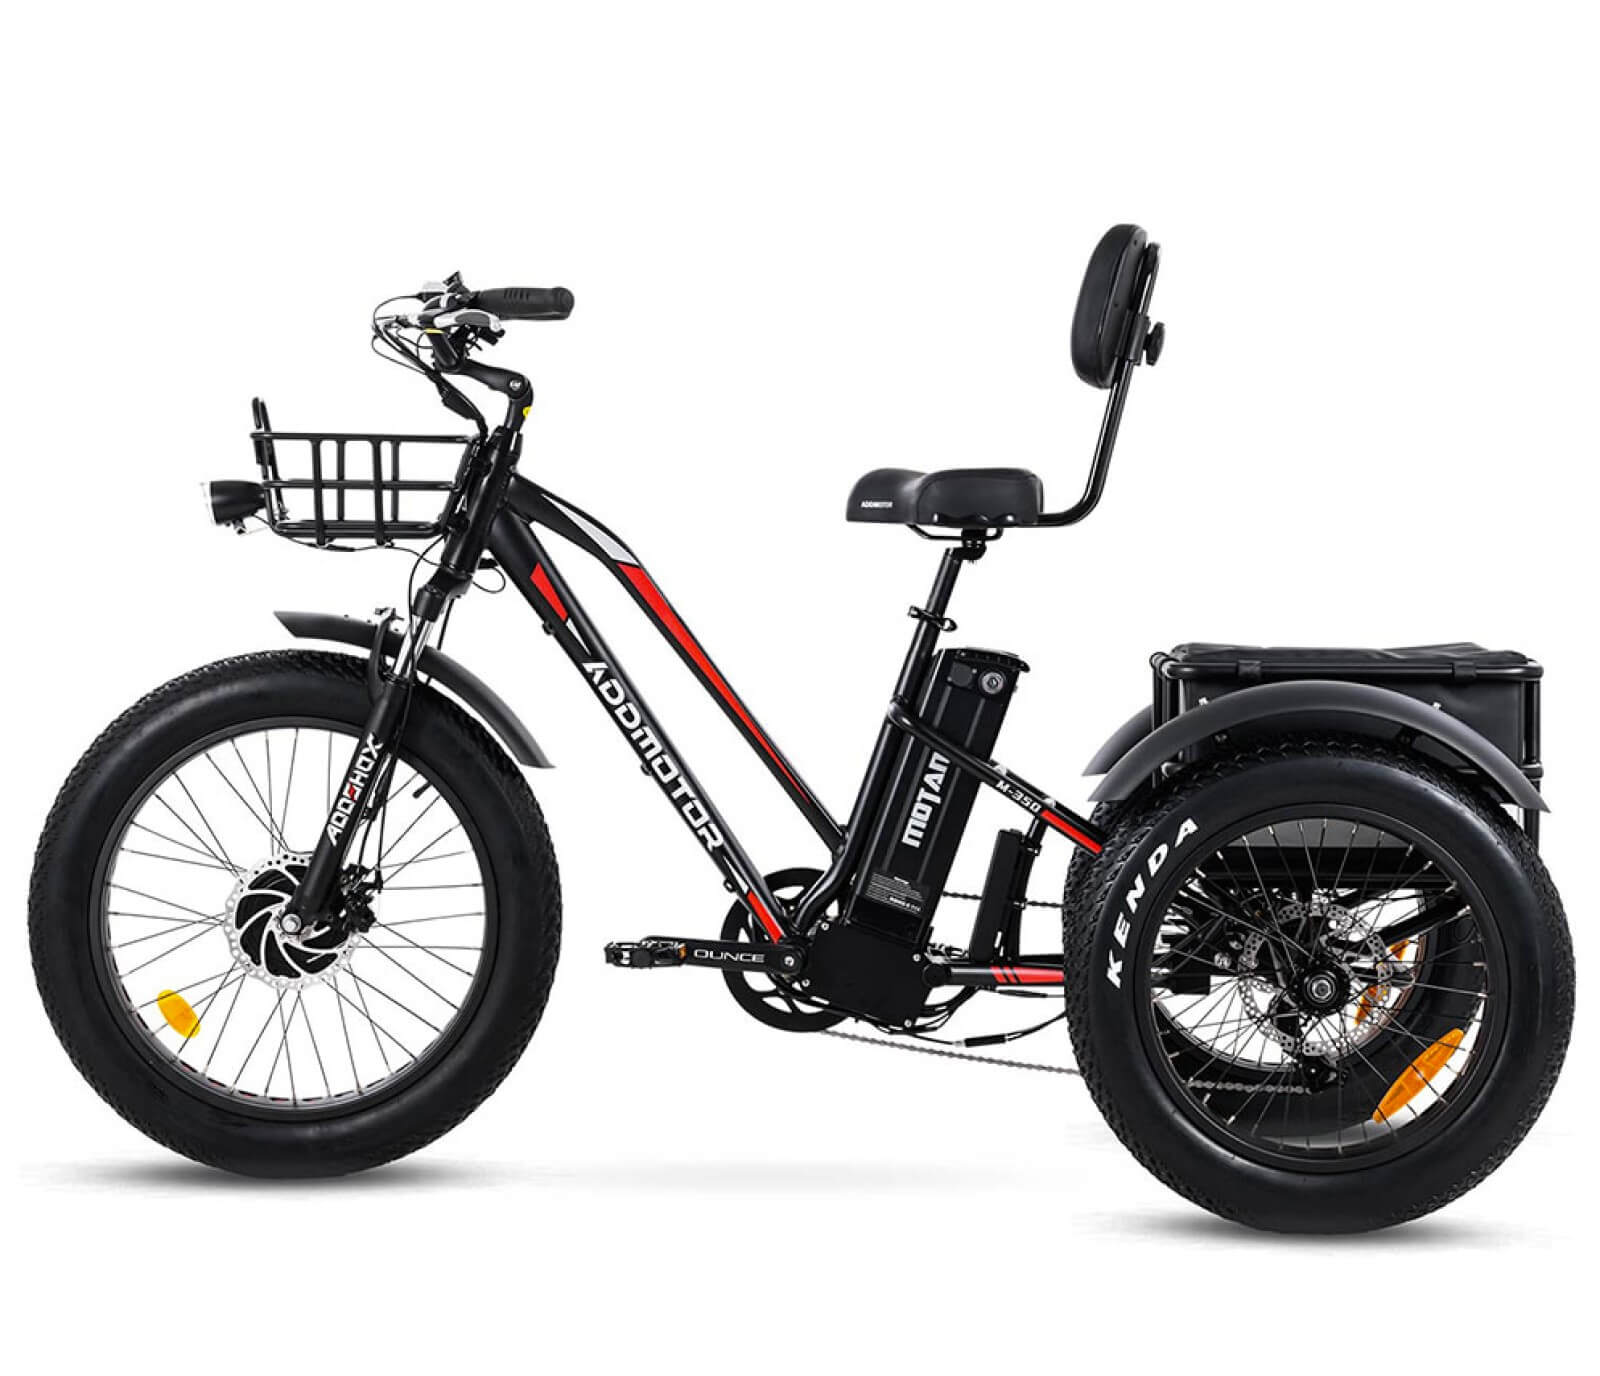 2015  Electric auto rickshaw baji baji three seater e-rickshaw loader | Qiangsheng Electric Tricycle Factory, E rickshaw,Auto rickshaw, battery  rickshaw suppliers, Manufacturer